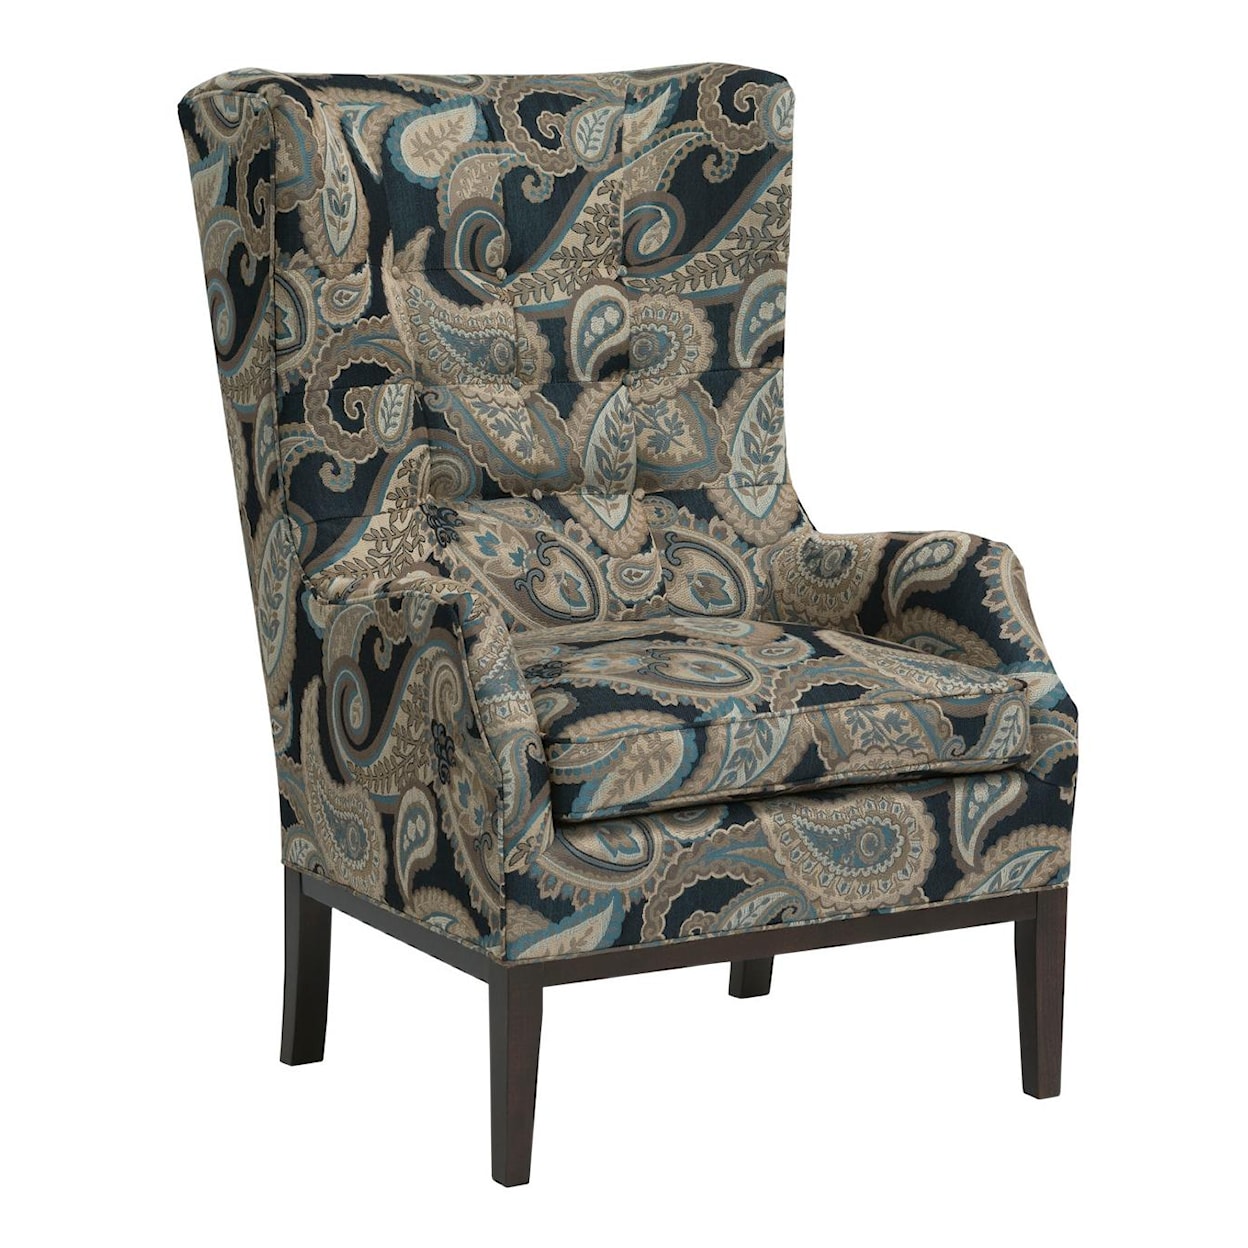 Kincaid Furniture Accent Chairs Morgan Wing Chair